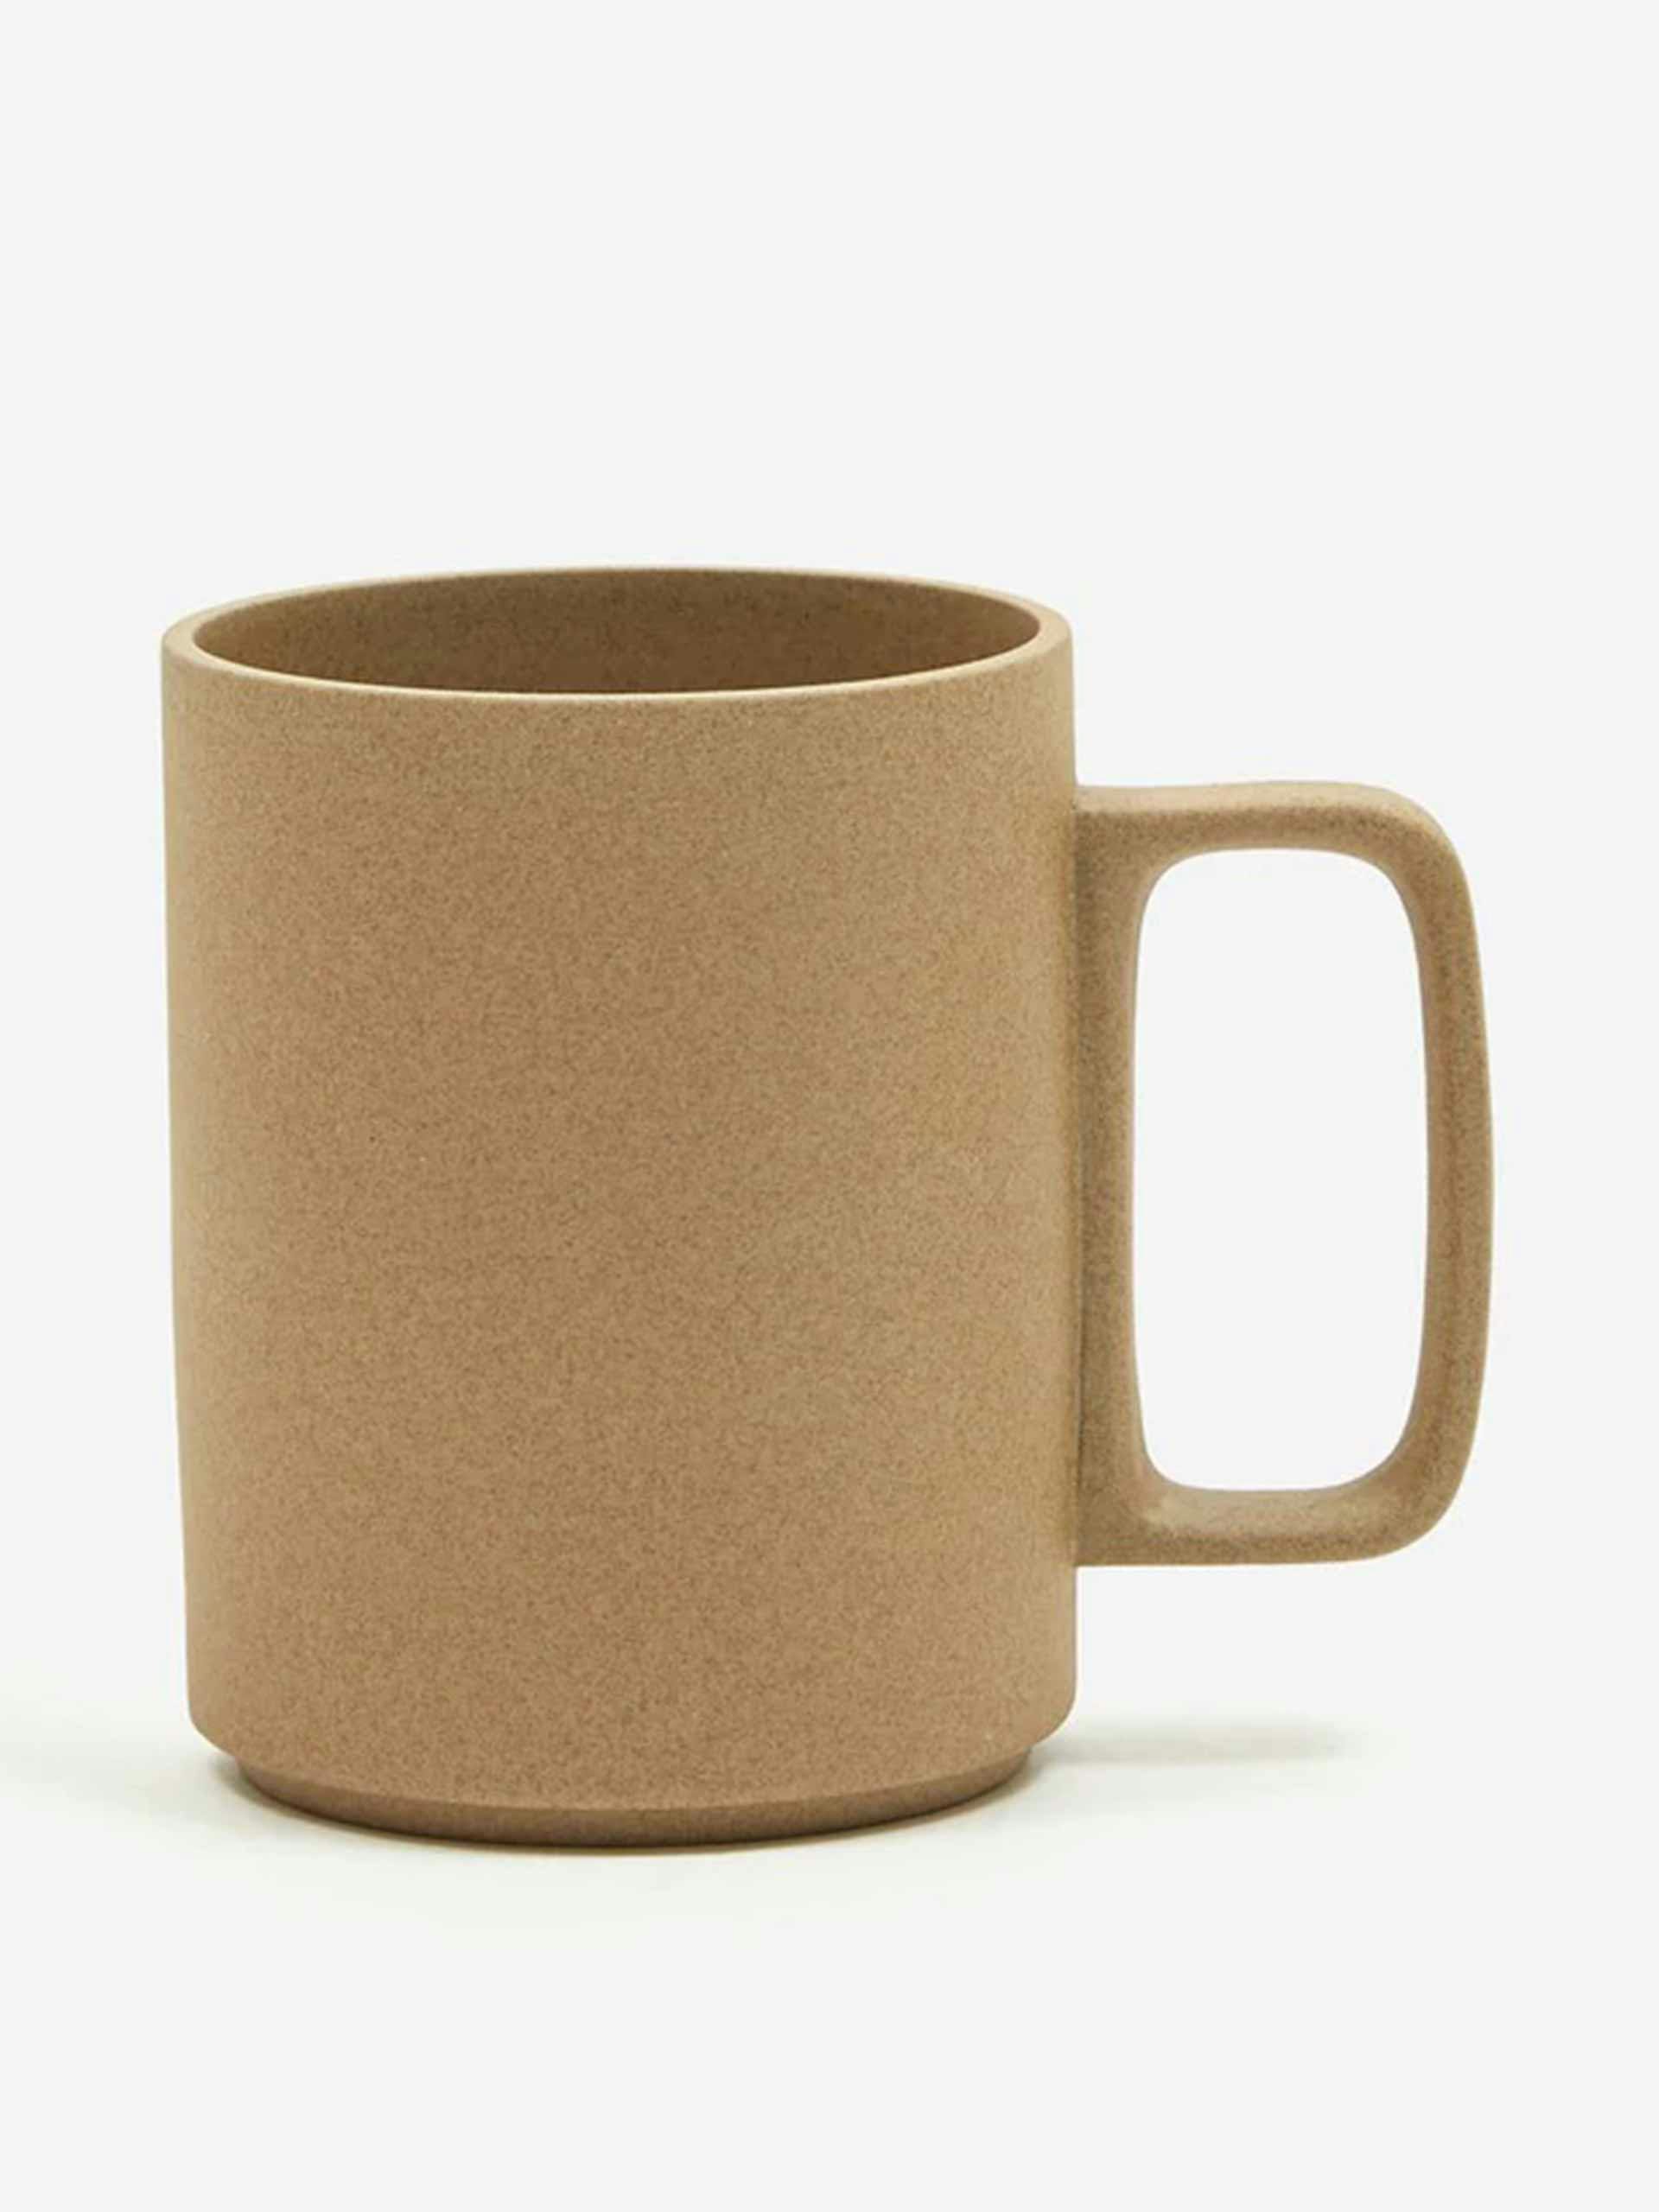 Neutral porcelain mug